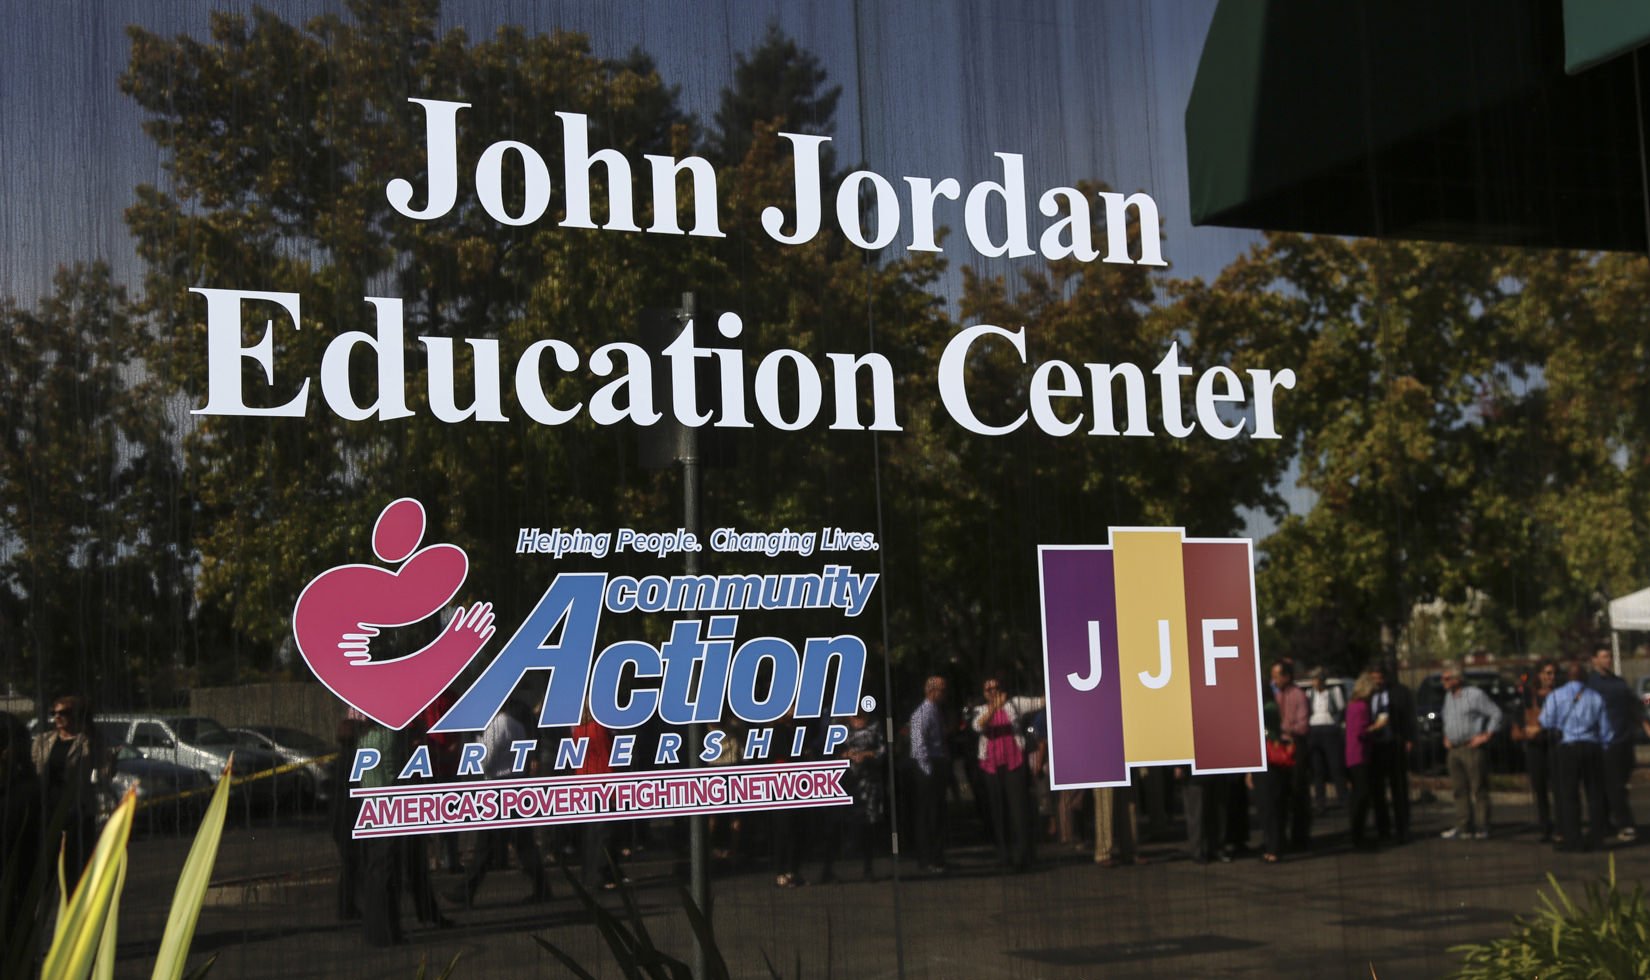 John Jordan Education Center, John Jordan Foundation, and Community Action Partnership decals on a window